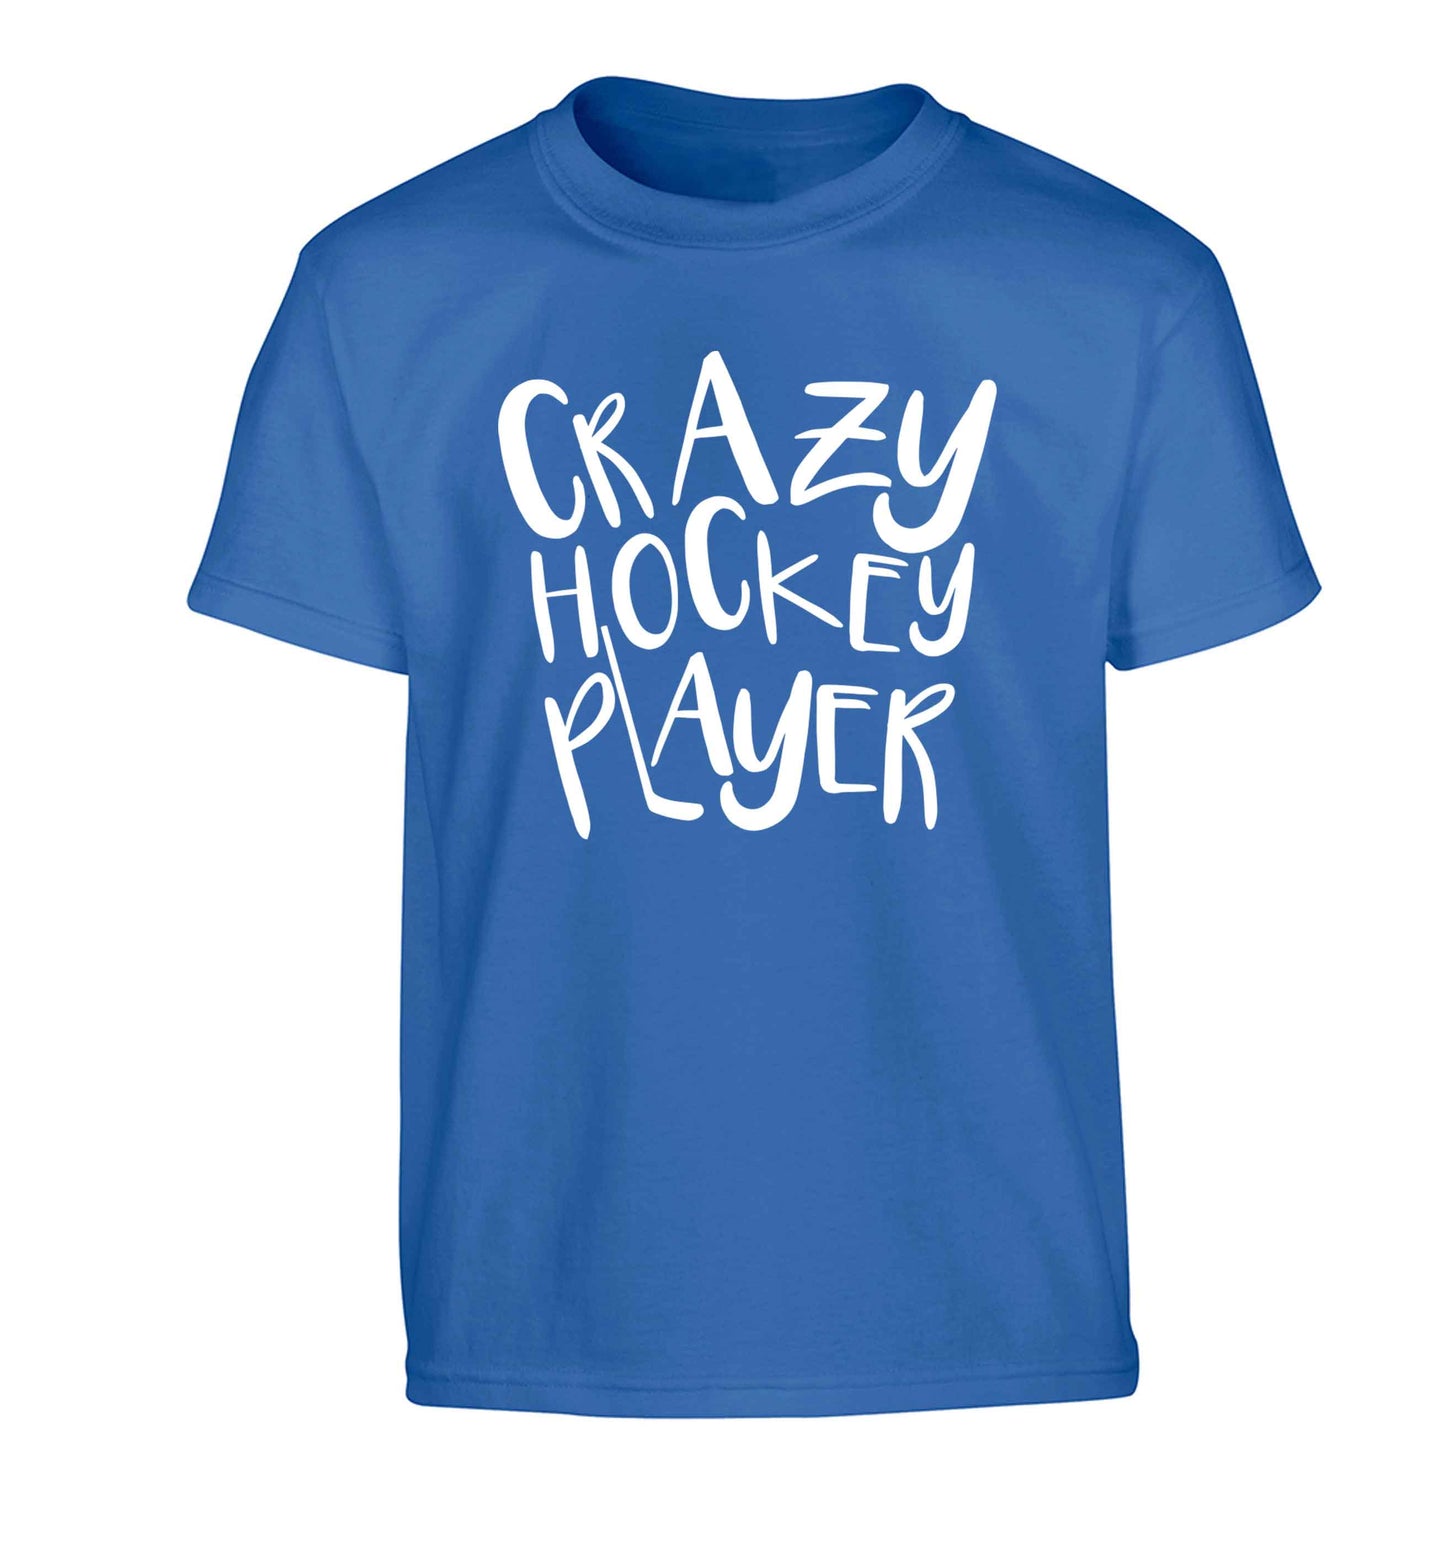 Crazy hockey player Children's blue Tshirt 12-13 Years